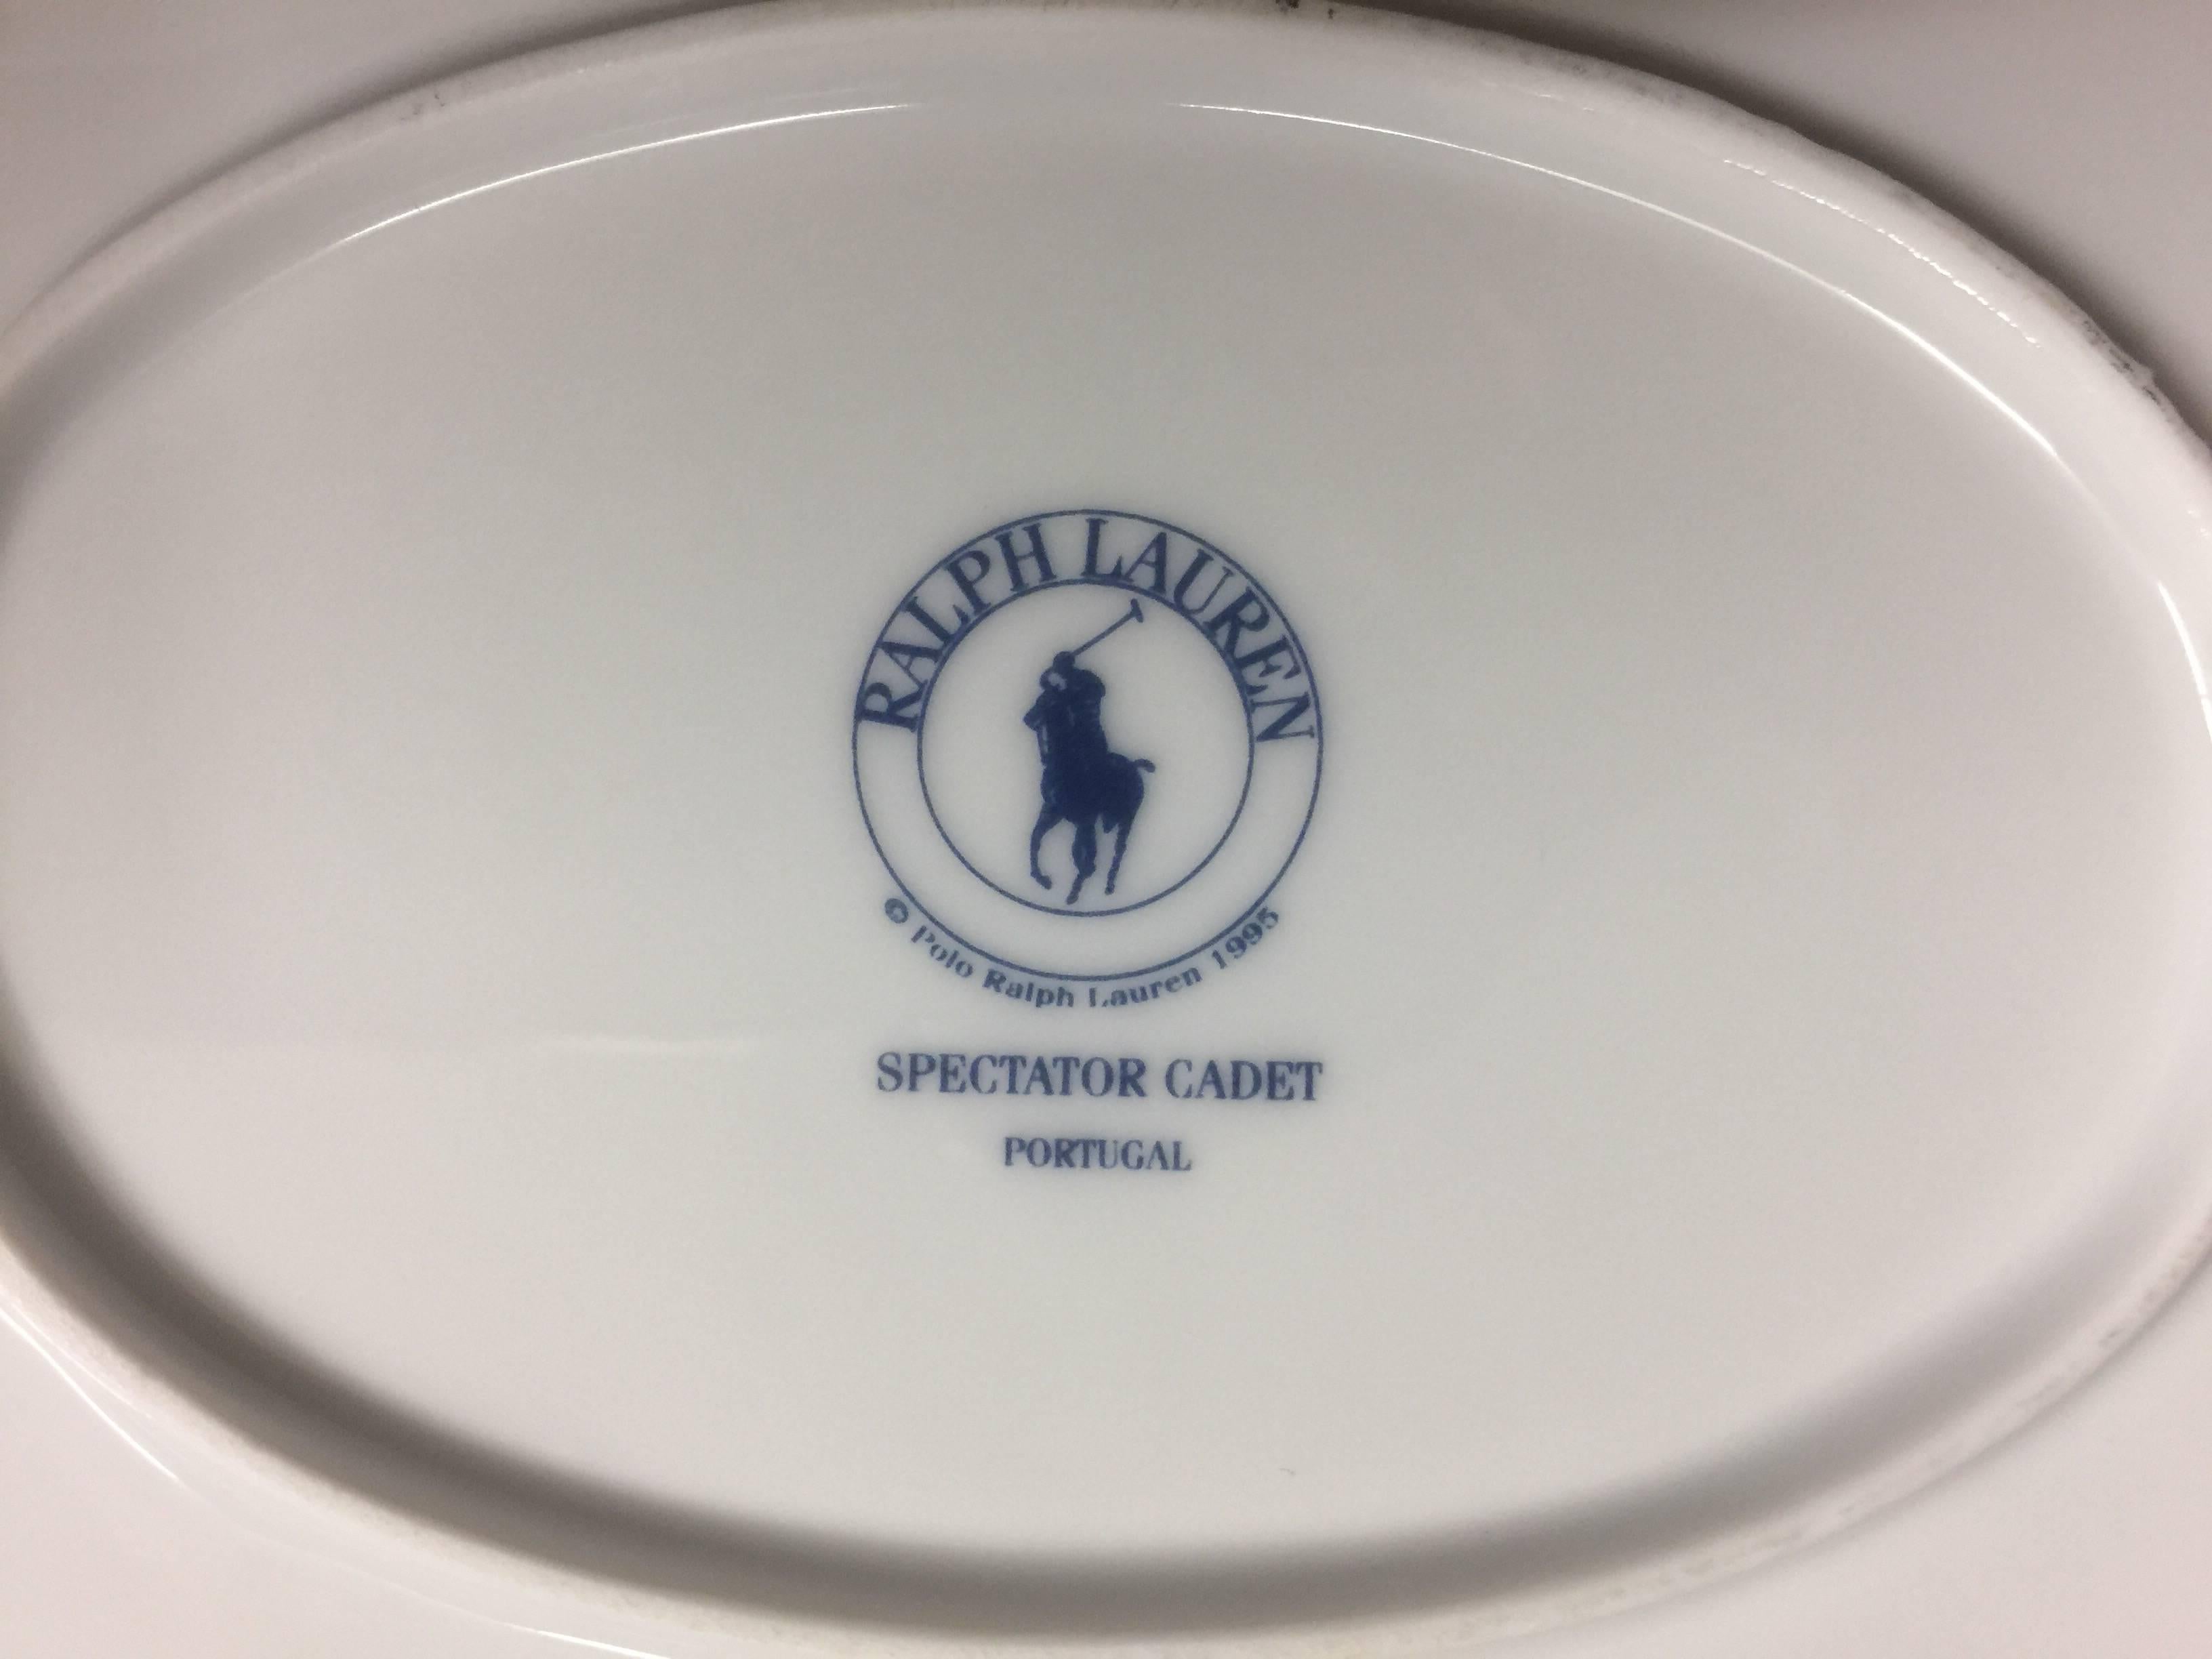 Late 20th Century Ralph Lauren Home Oval Serving Platter in Cadet Spectator Pattern